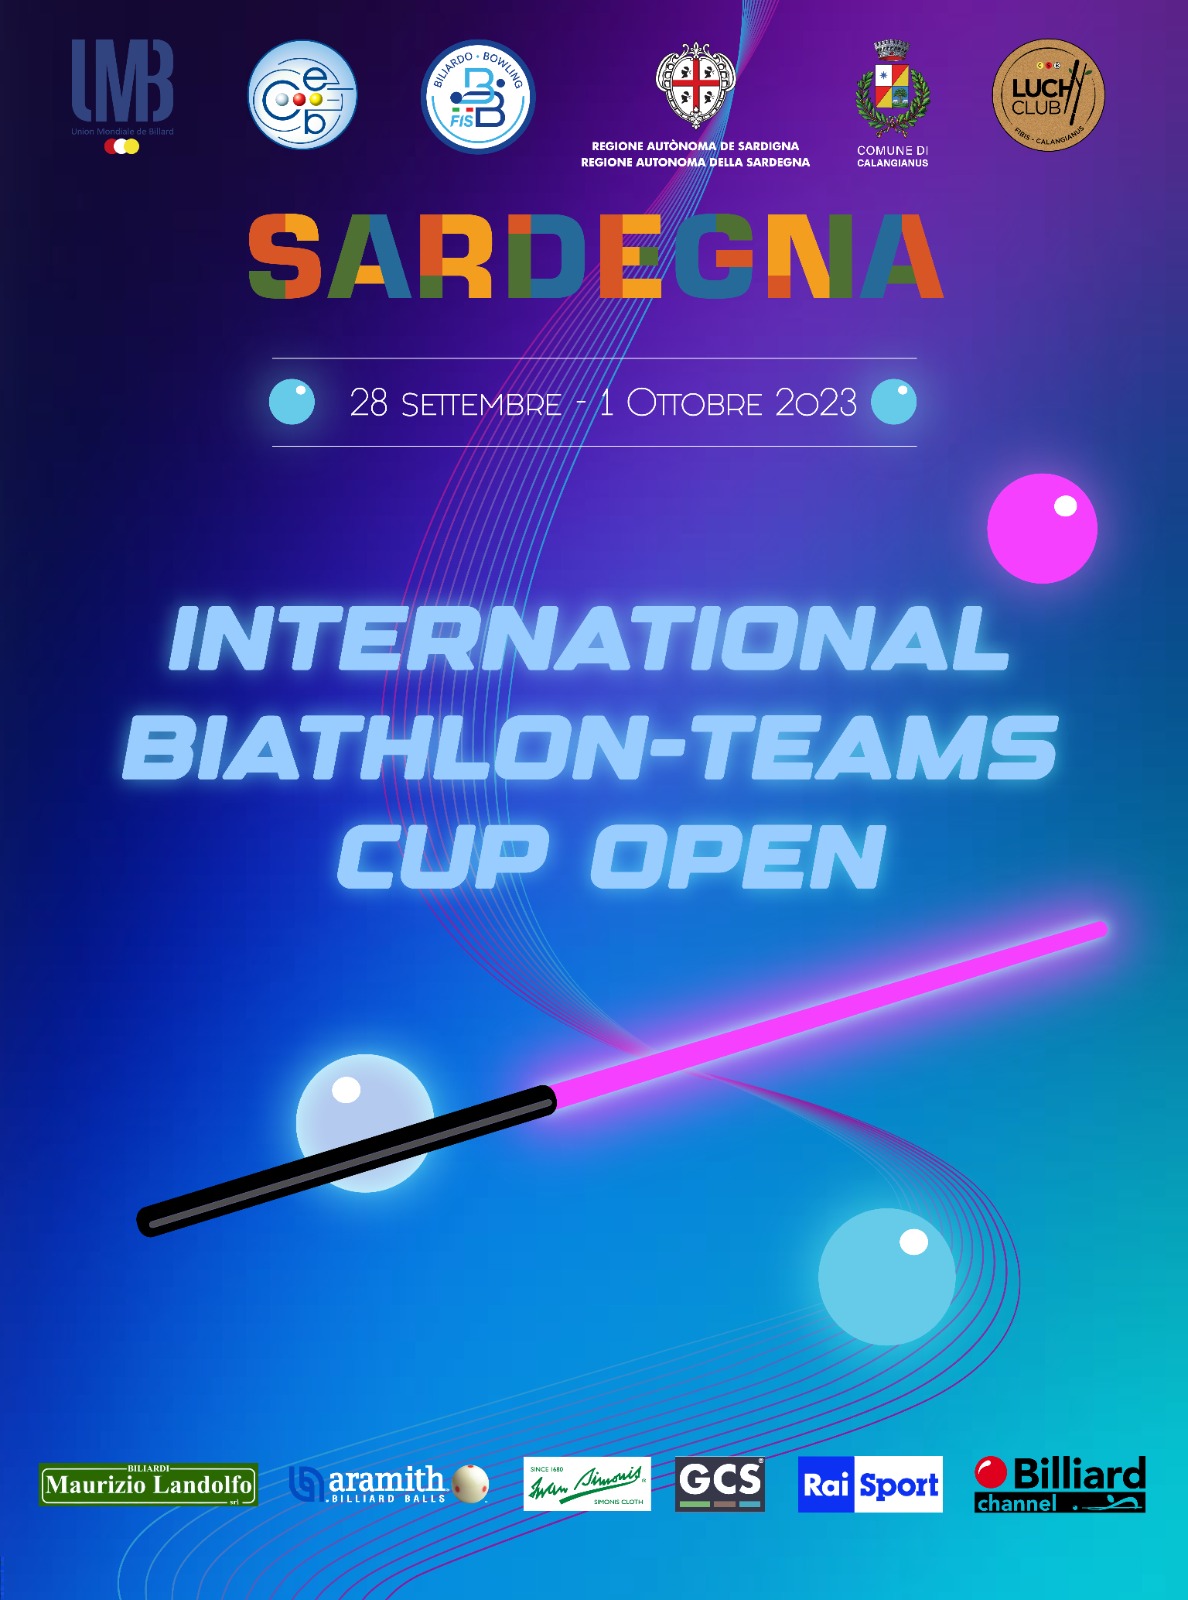 INTERNATIONAL BIATHLON-TEAMS CUP OPEN